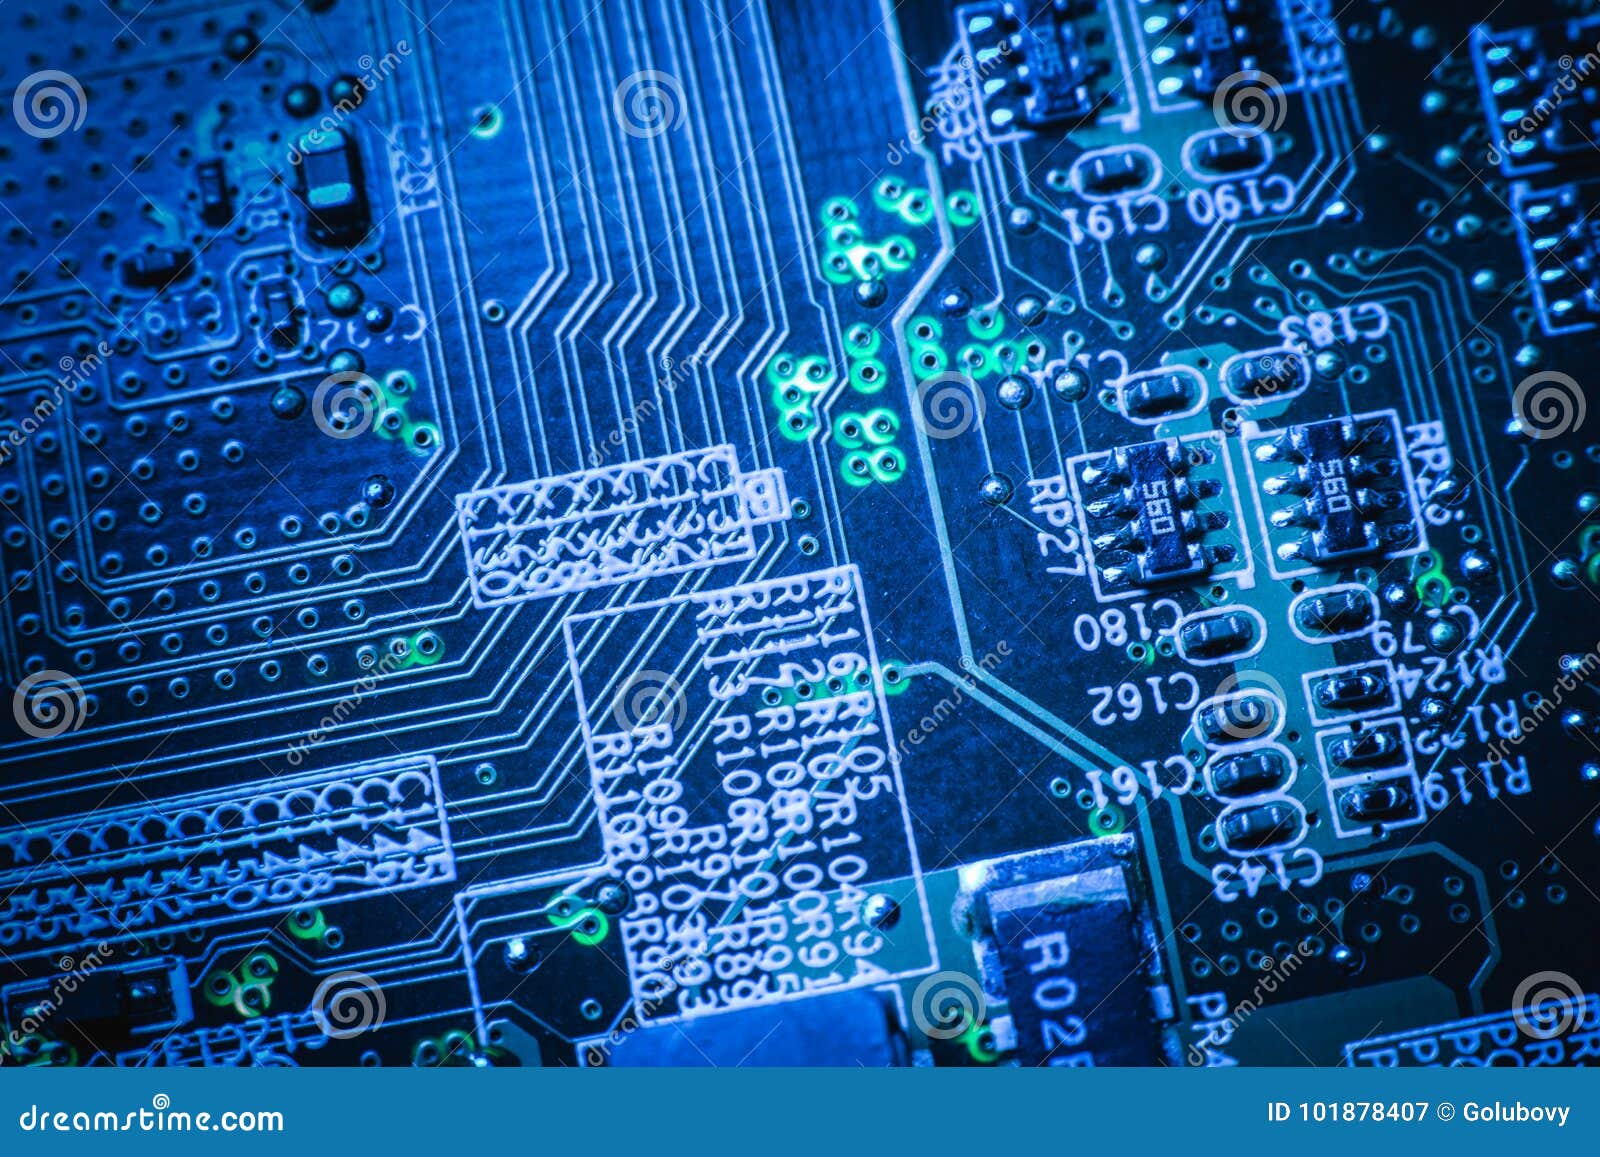 electronics engineering motherboard digital data